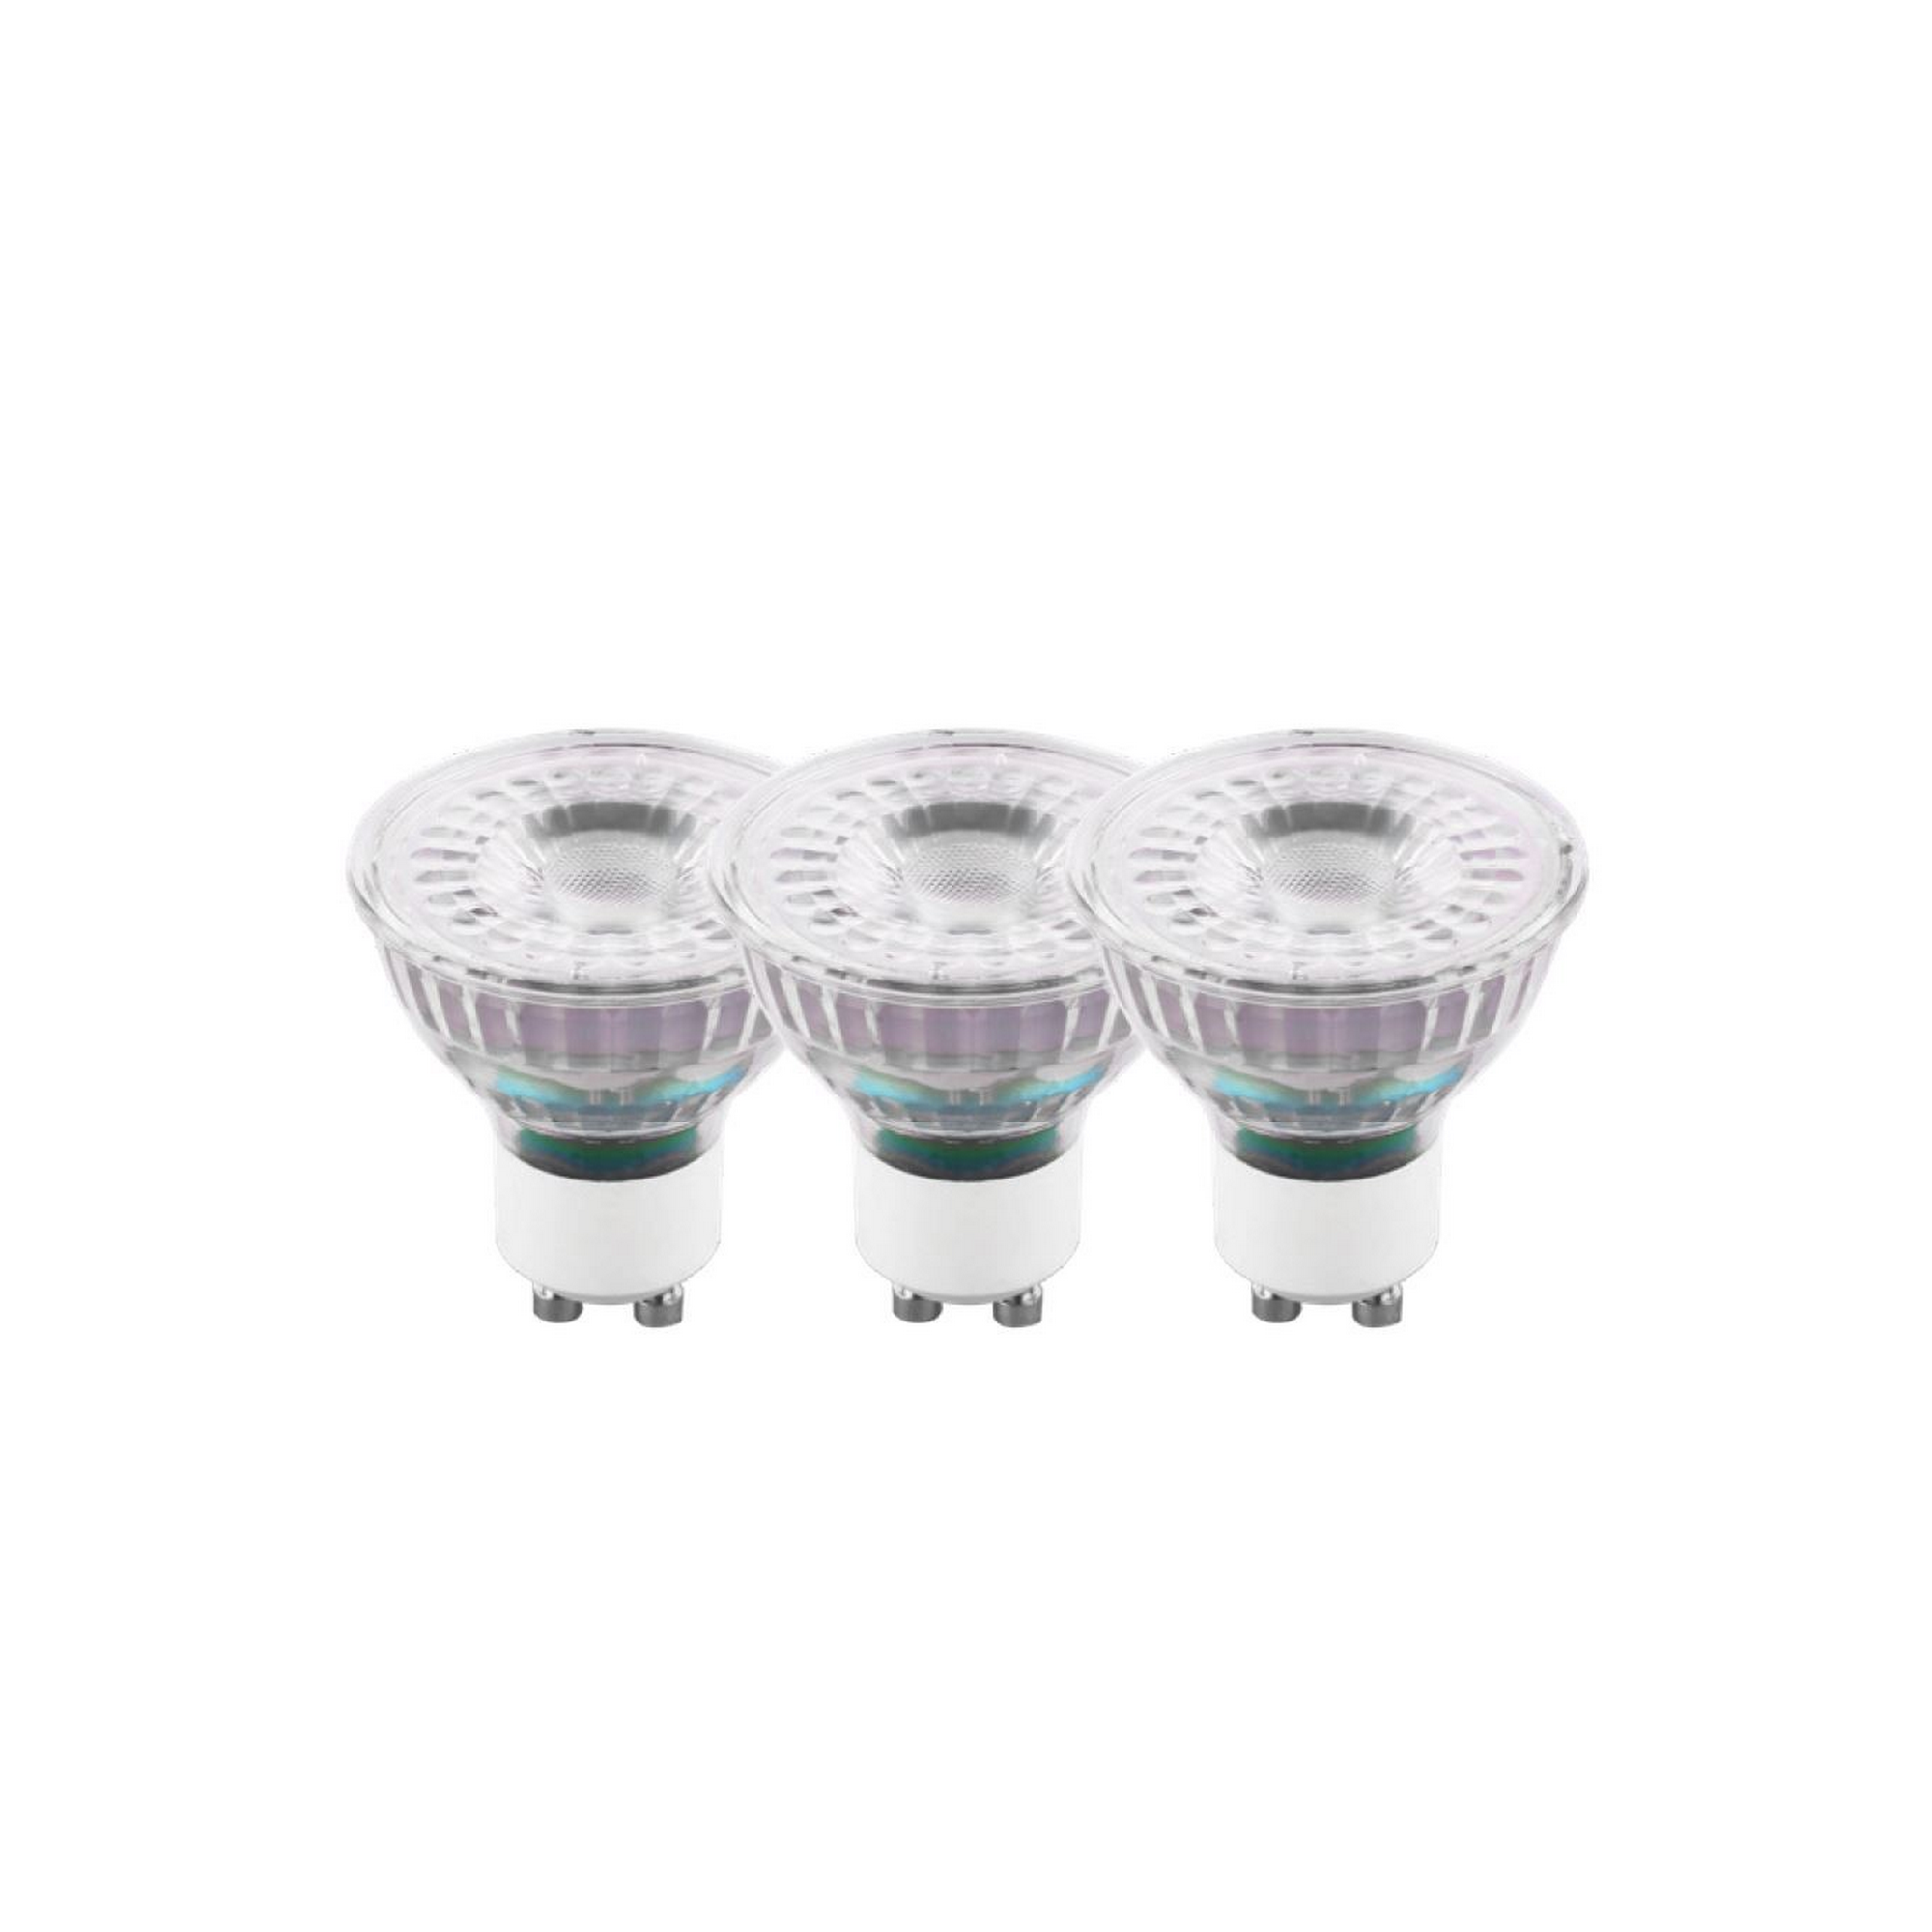 LED-Reflektor-Lampe 3 W GU10 warmweiß 250 lm 3 Stück + product picture